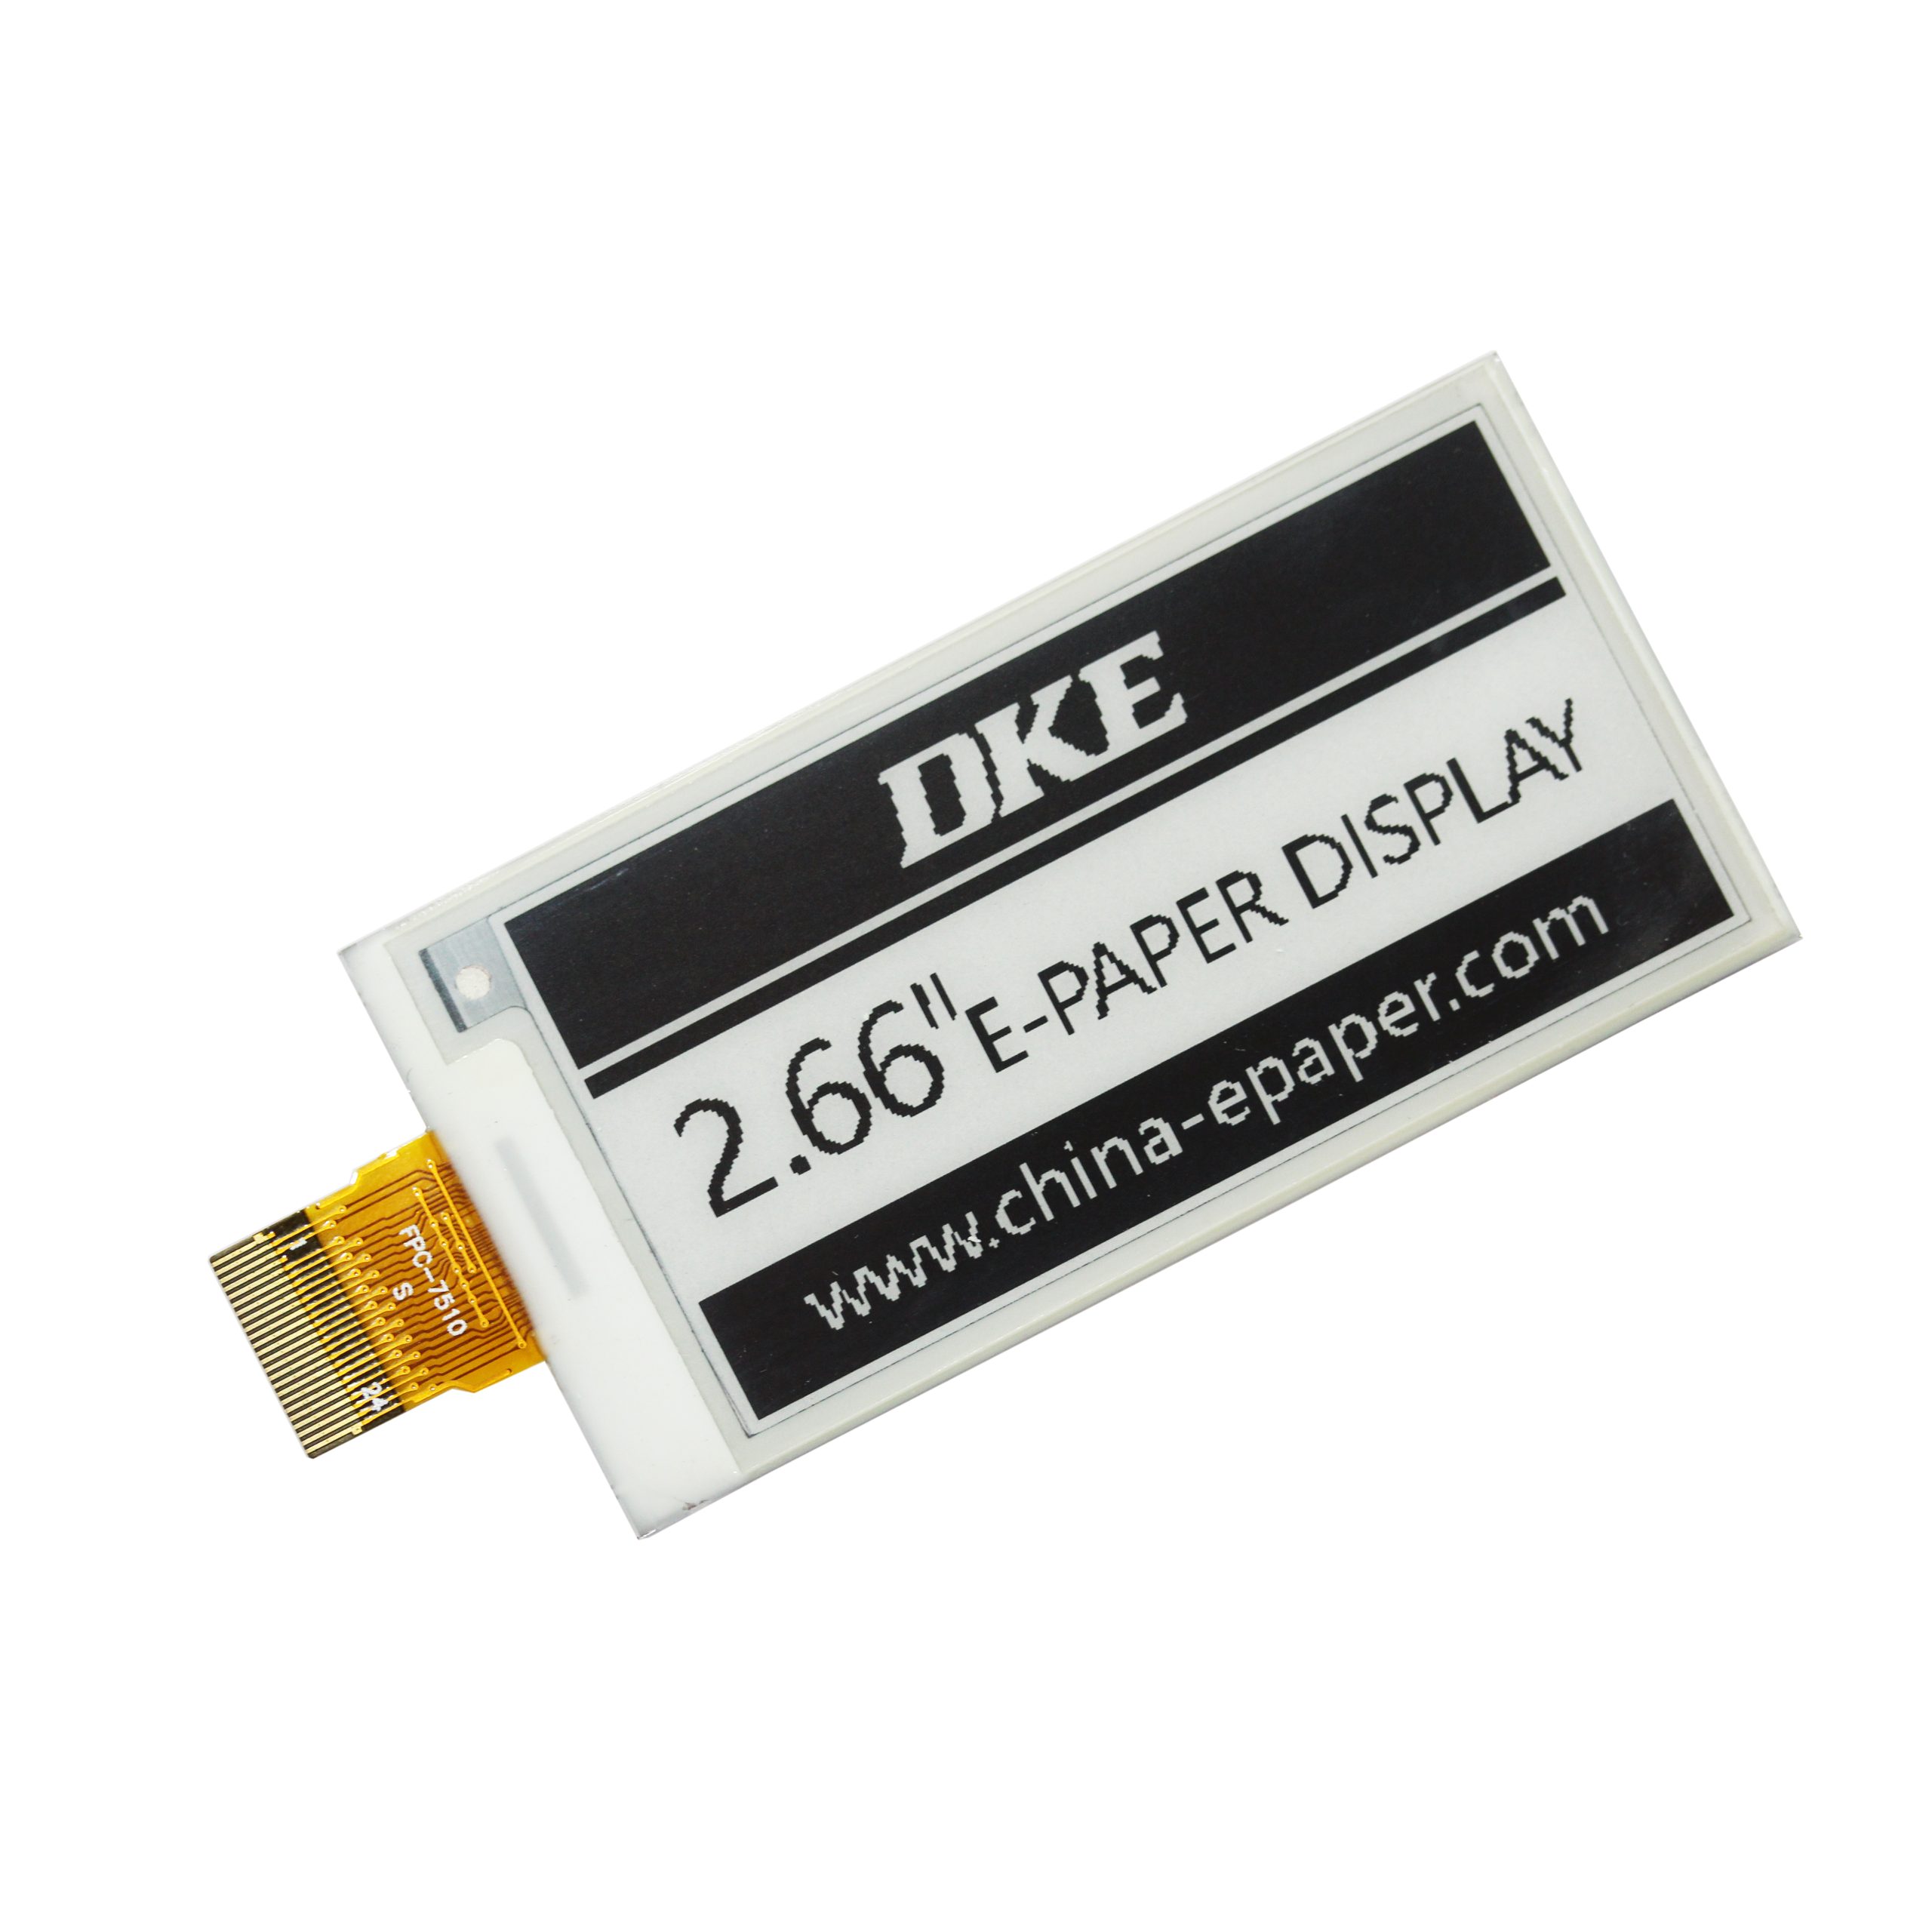 DKE 2.66 Inch Epaper Display